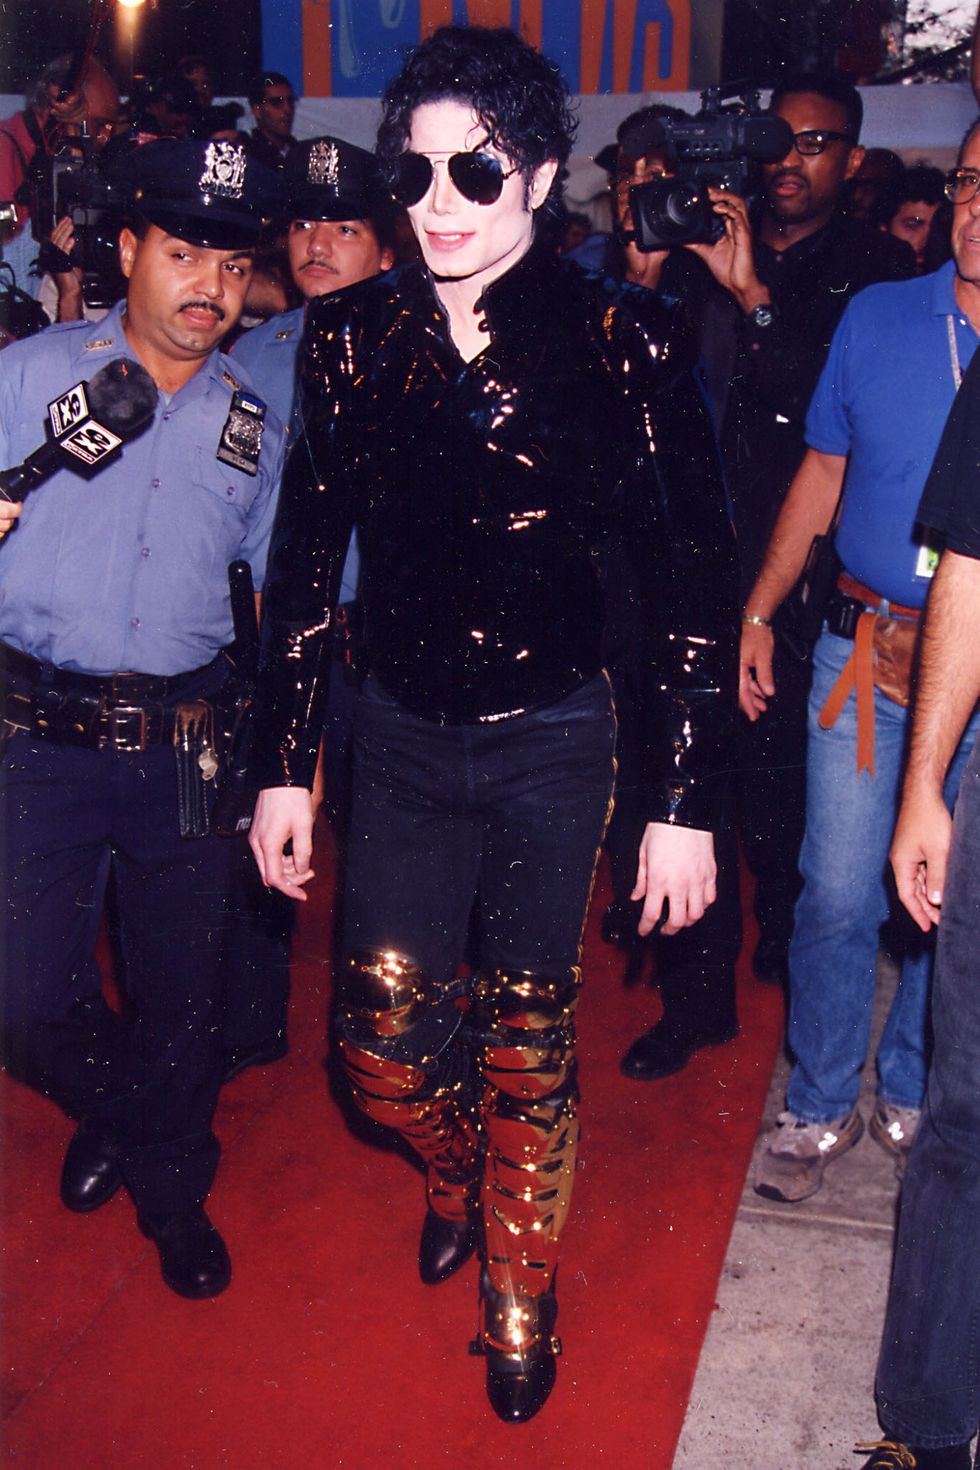 Michael Jackson's 10 Most Iconic Looks